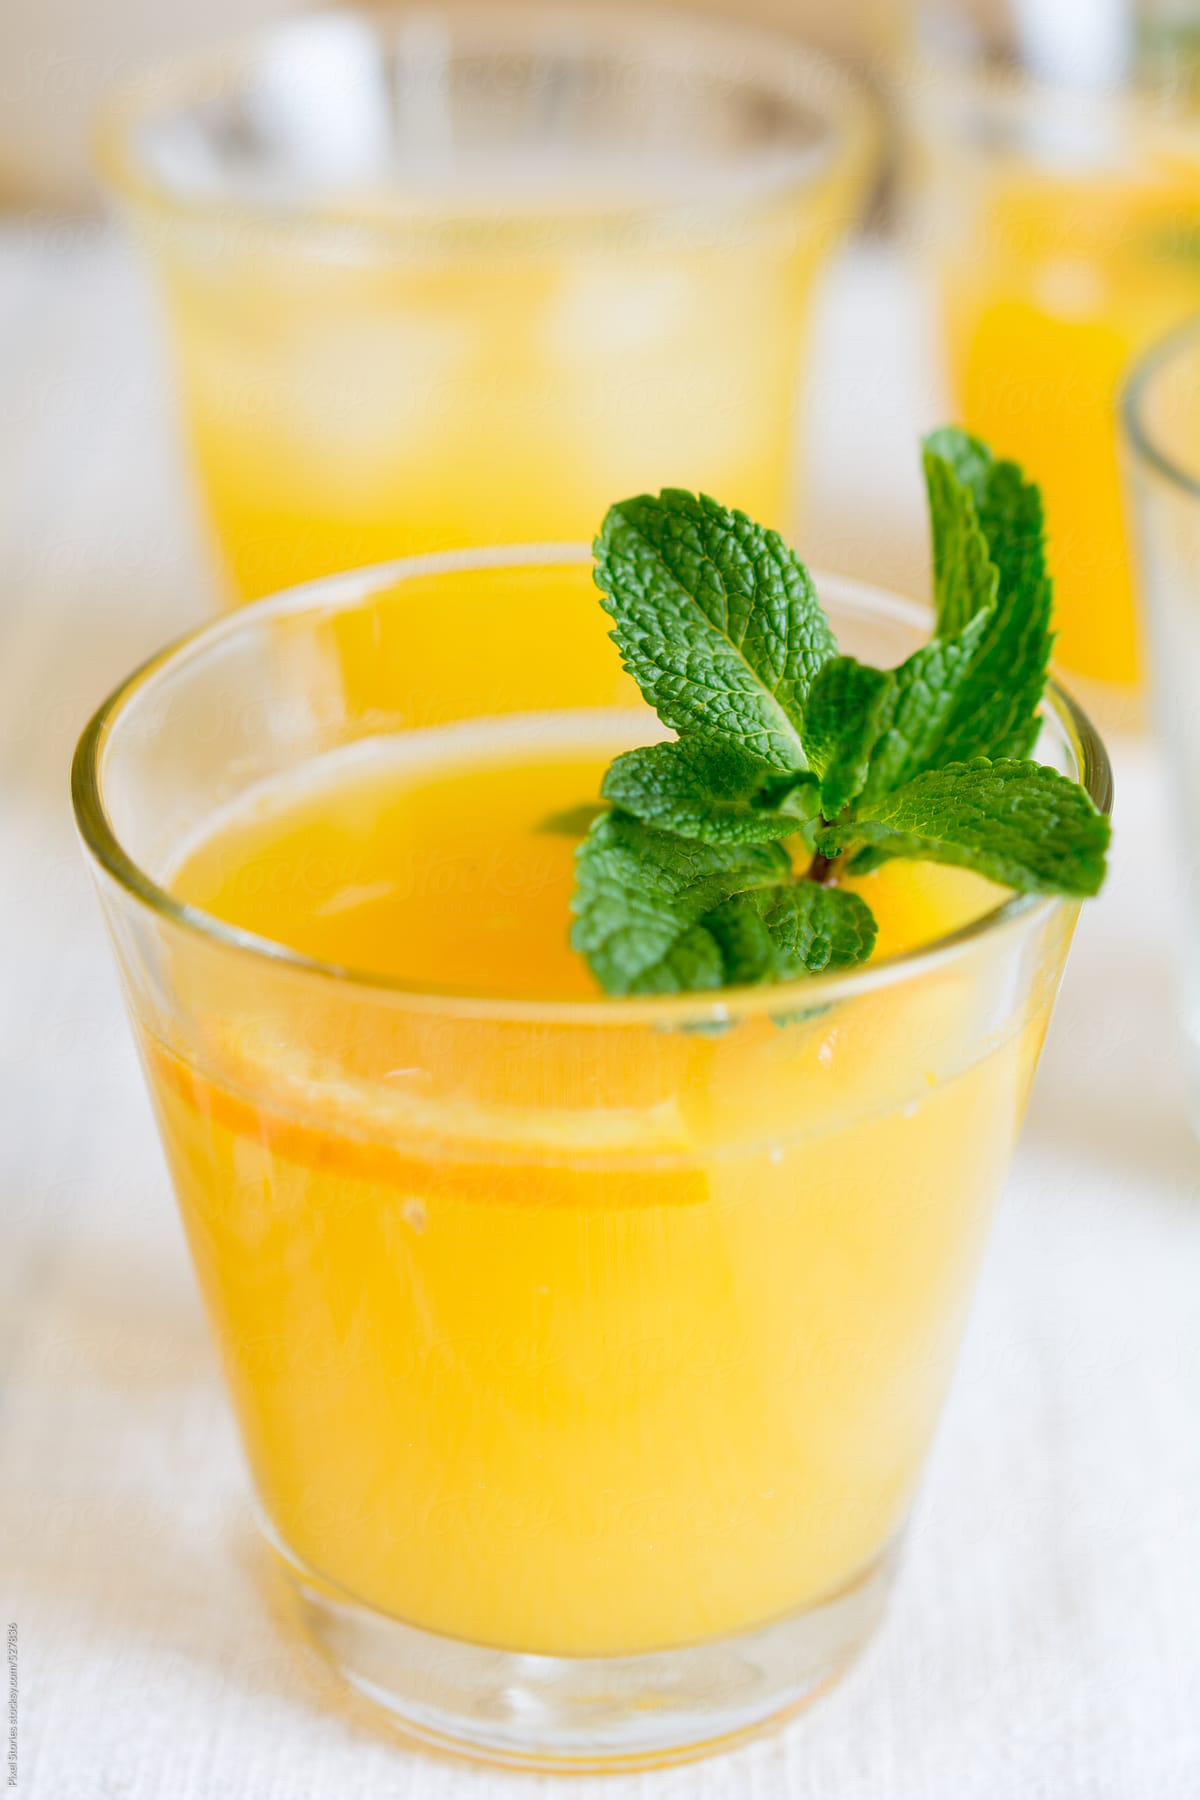 Drinks: close-up of glass full of fresh orange juice